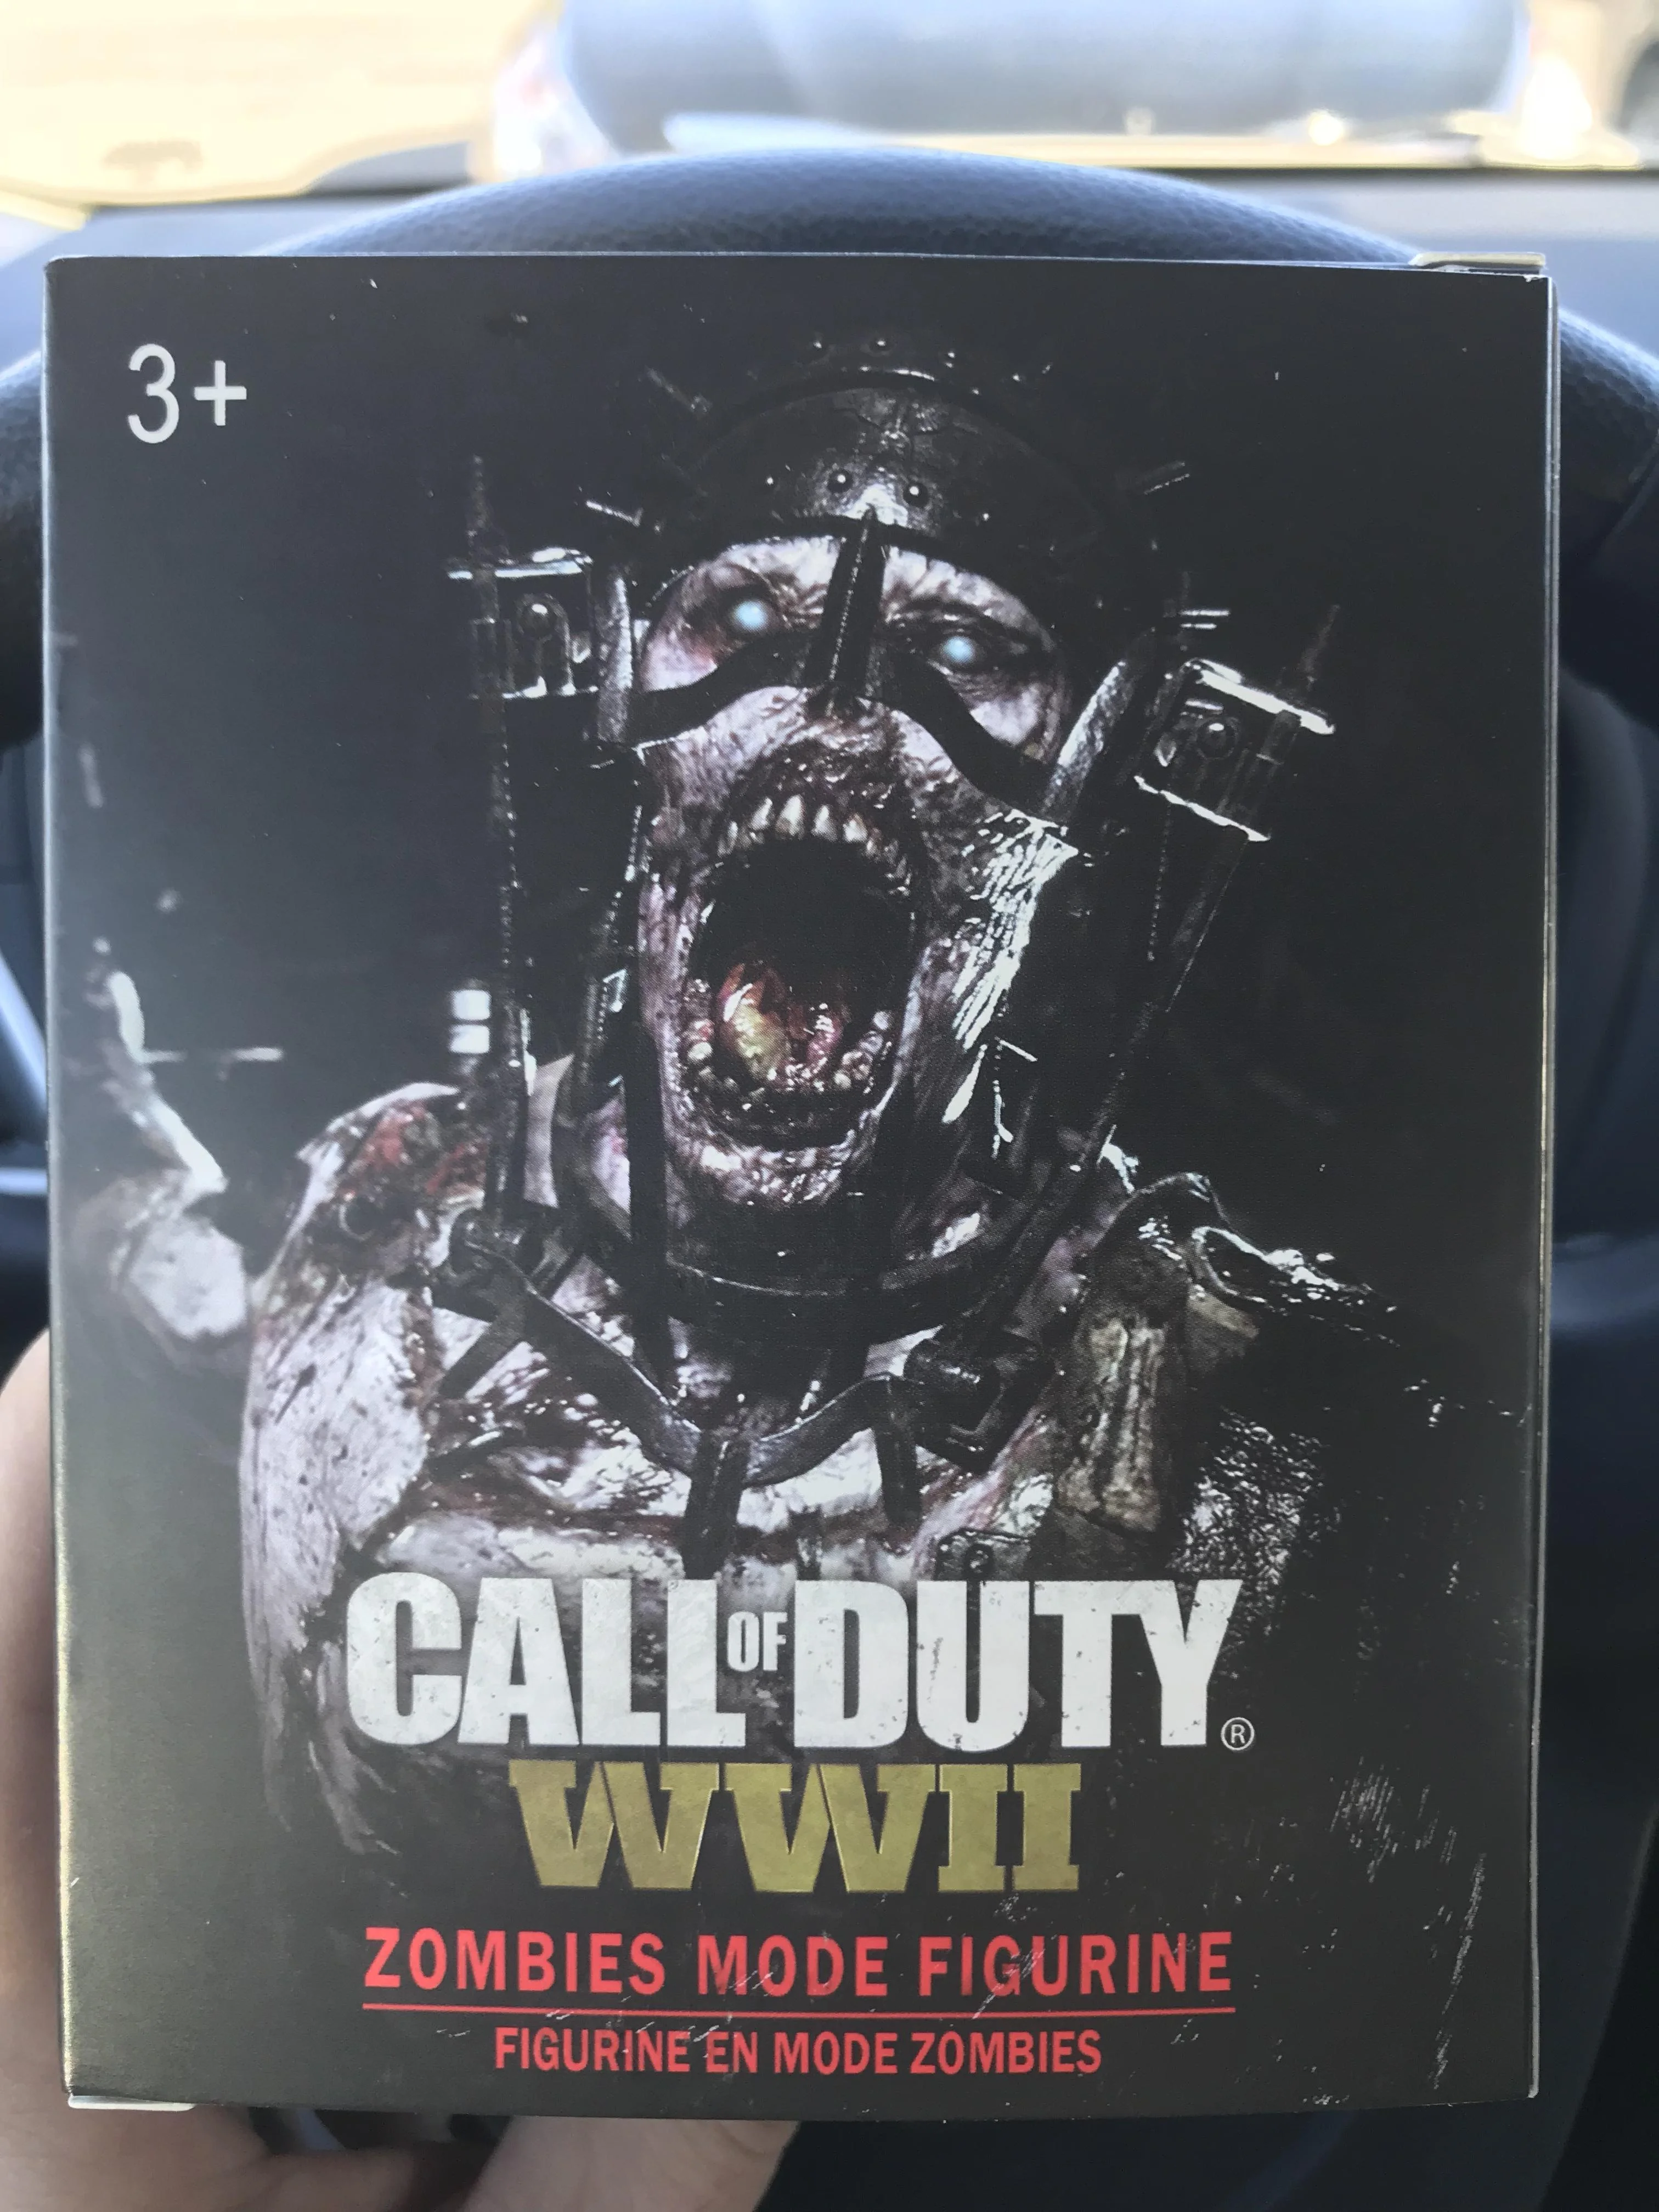 За предзаказ Call of Duty: WWII раздают ужасного качества фигурку зомби-нациста - фото 2